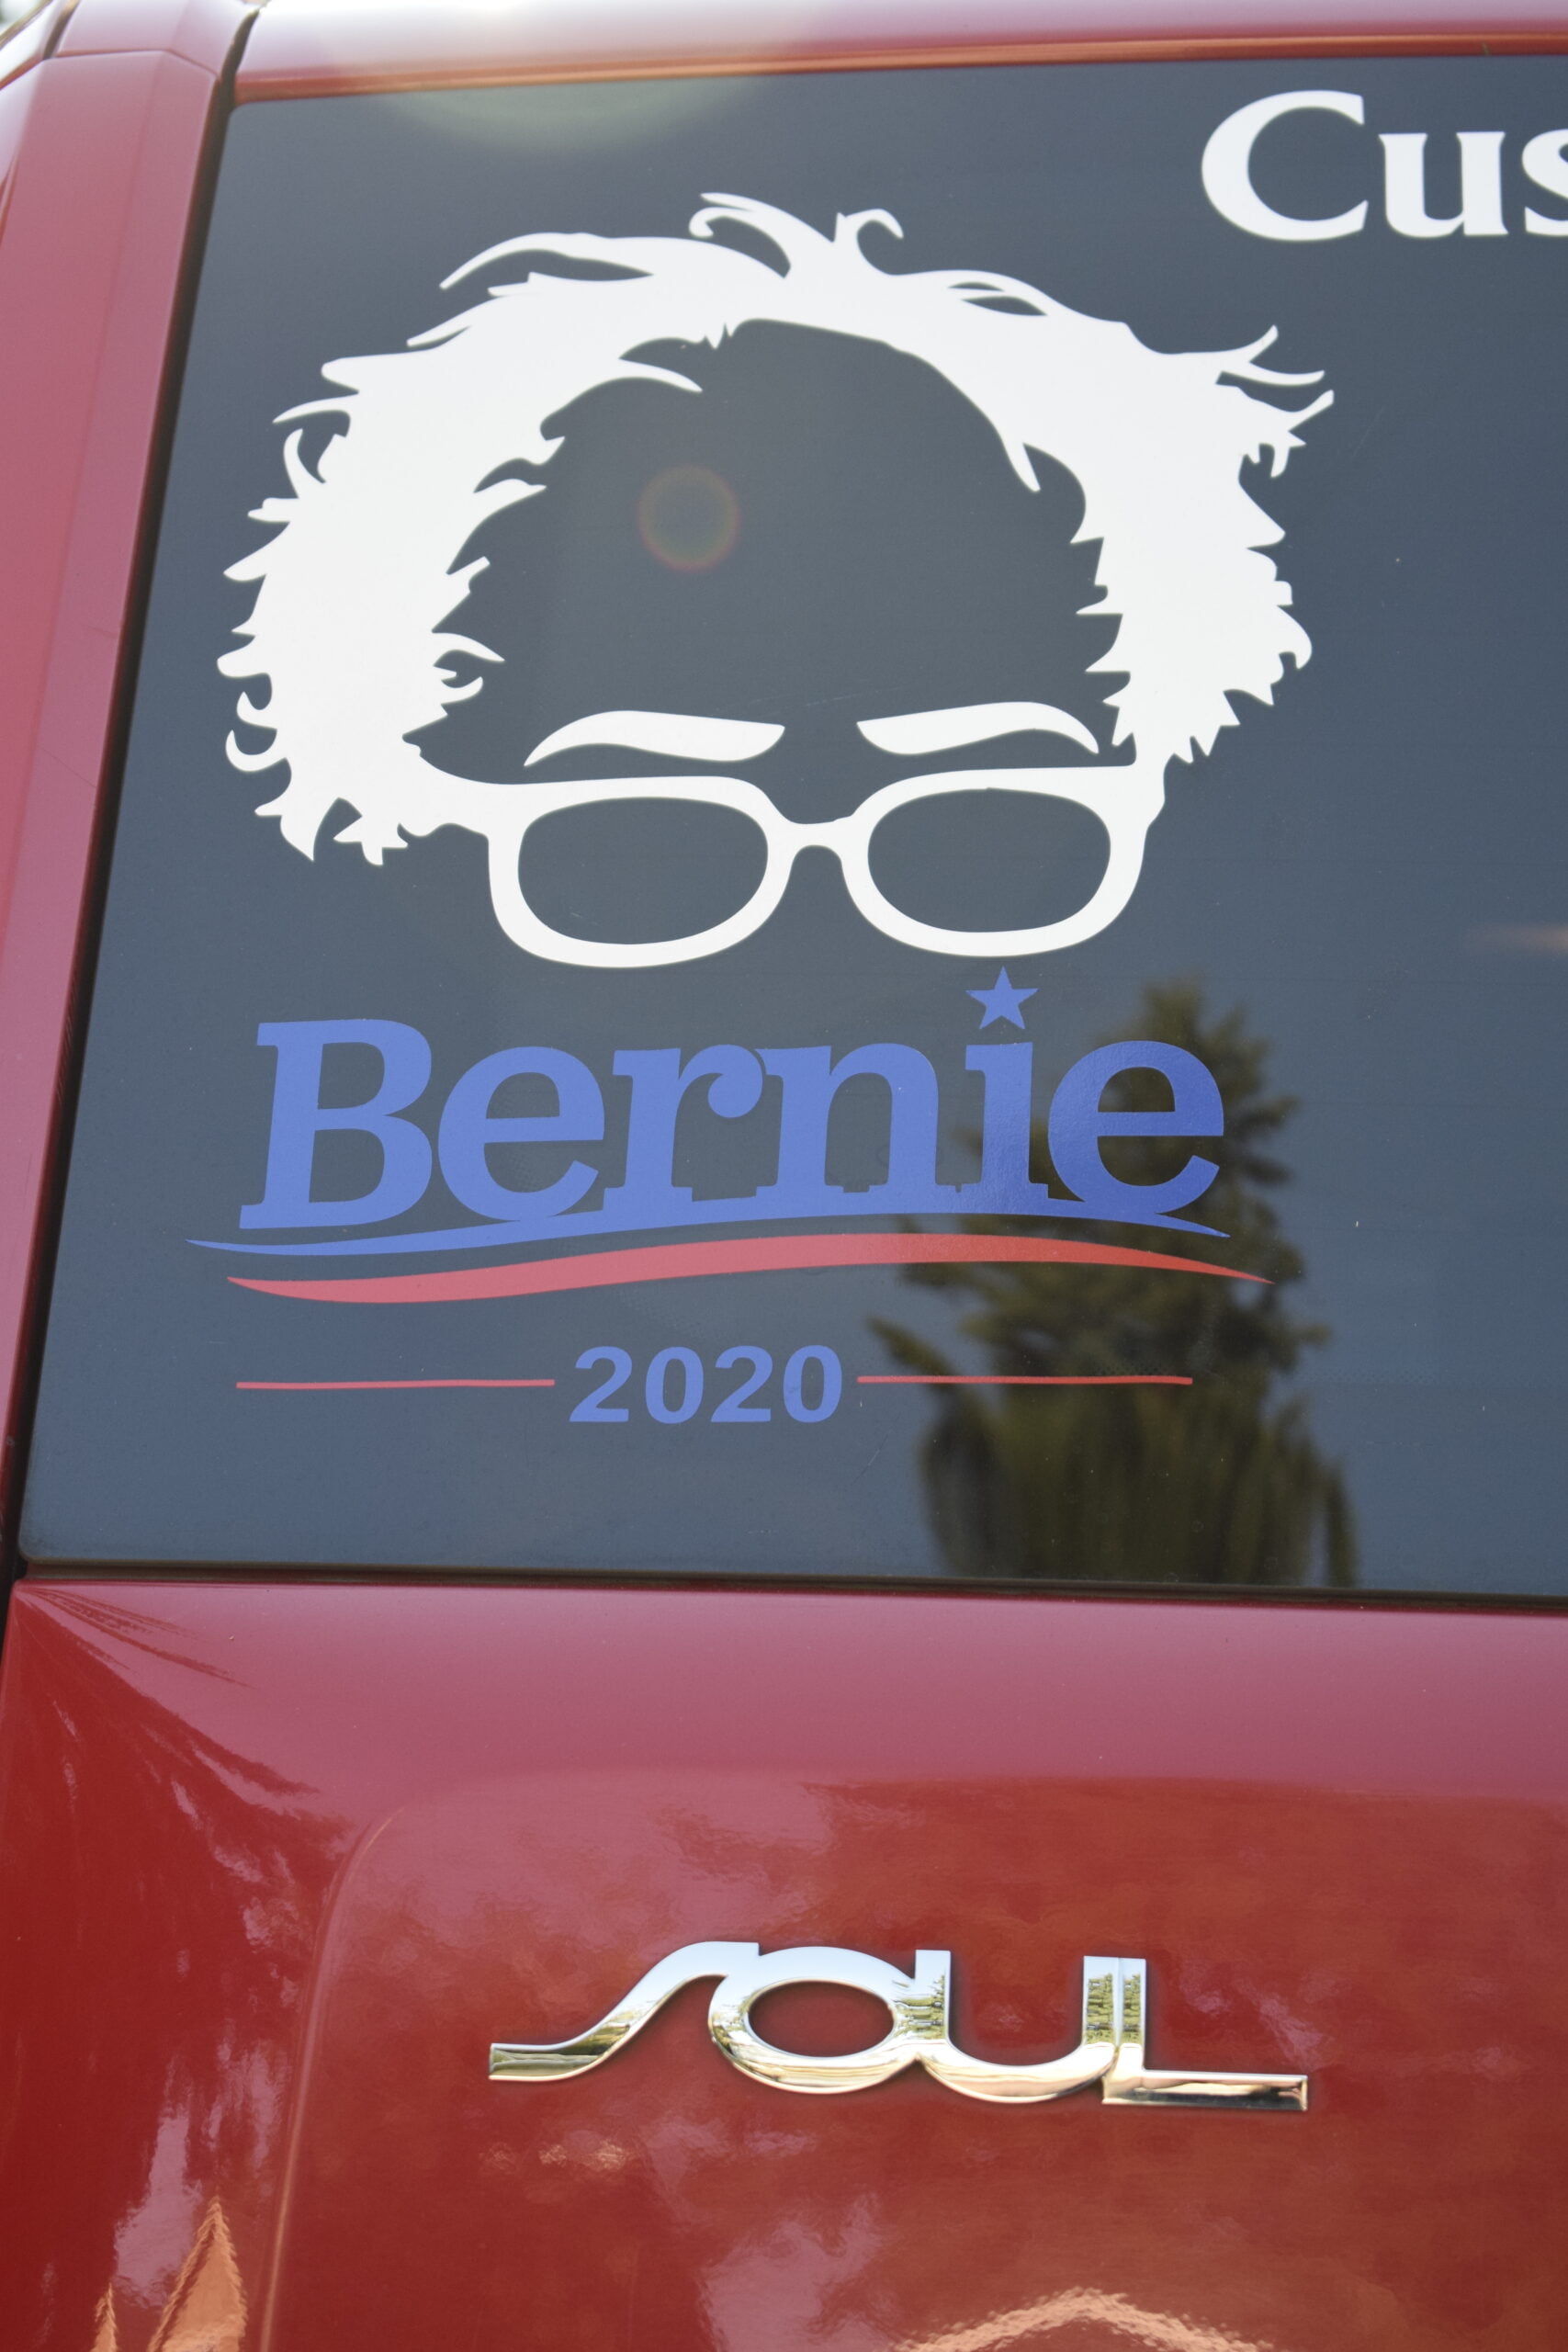 Galactic Sign Co creates custom car vinyl stickers supporting Bernie Sanders in 2020